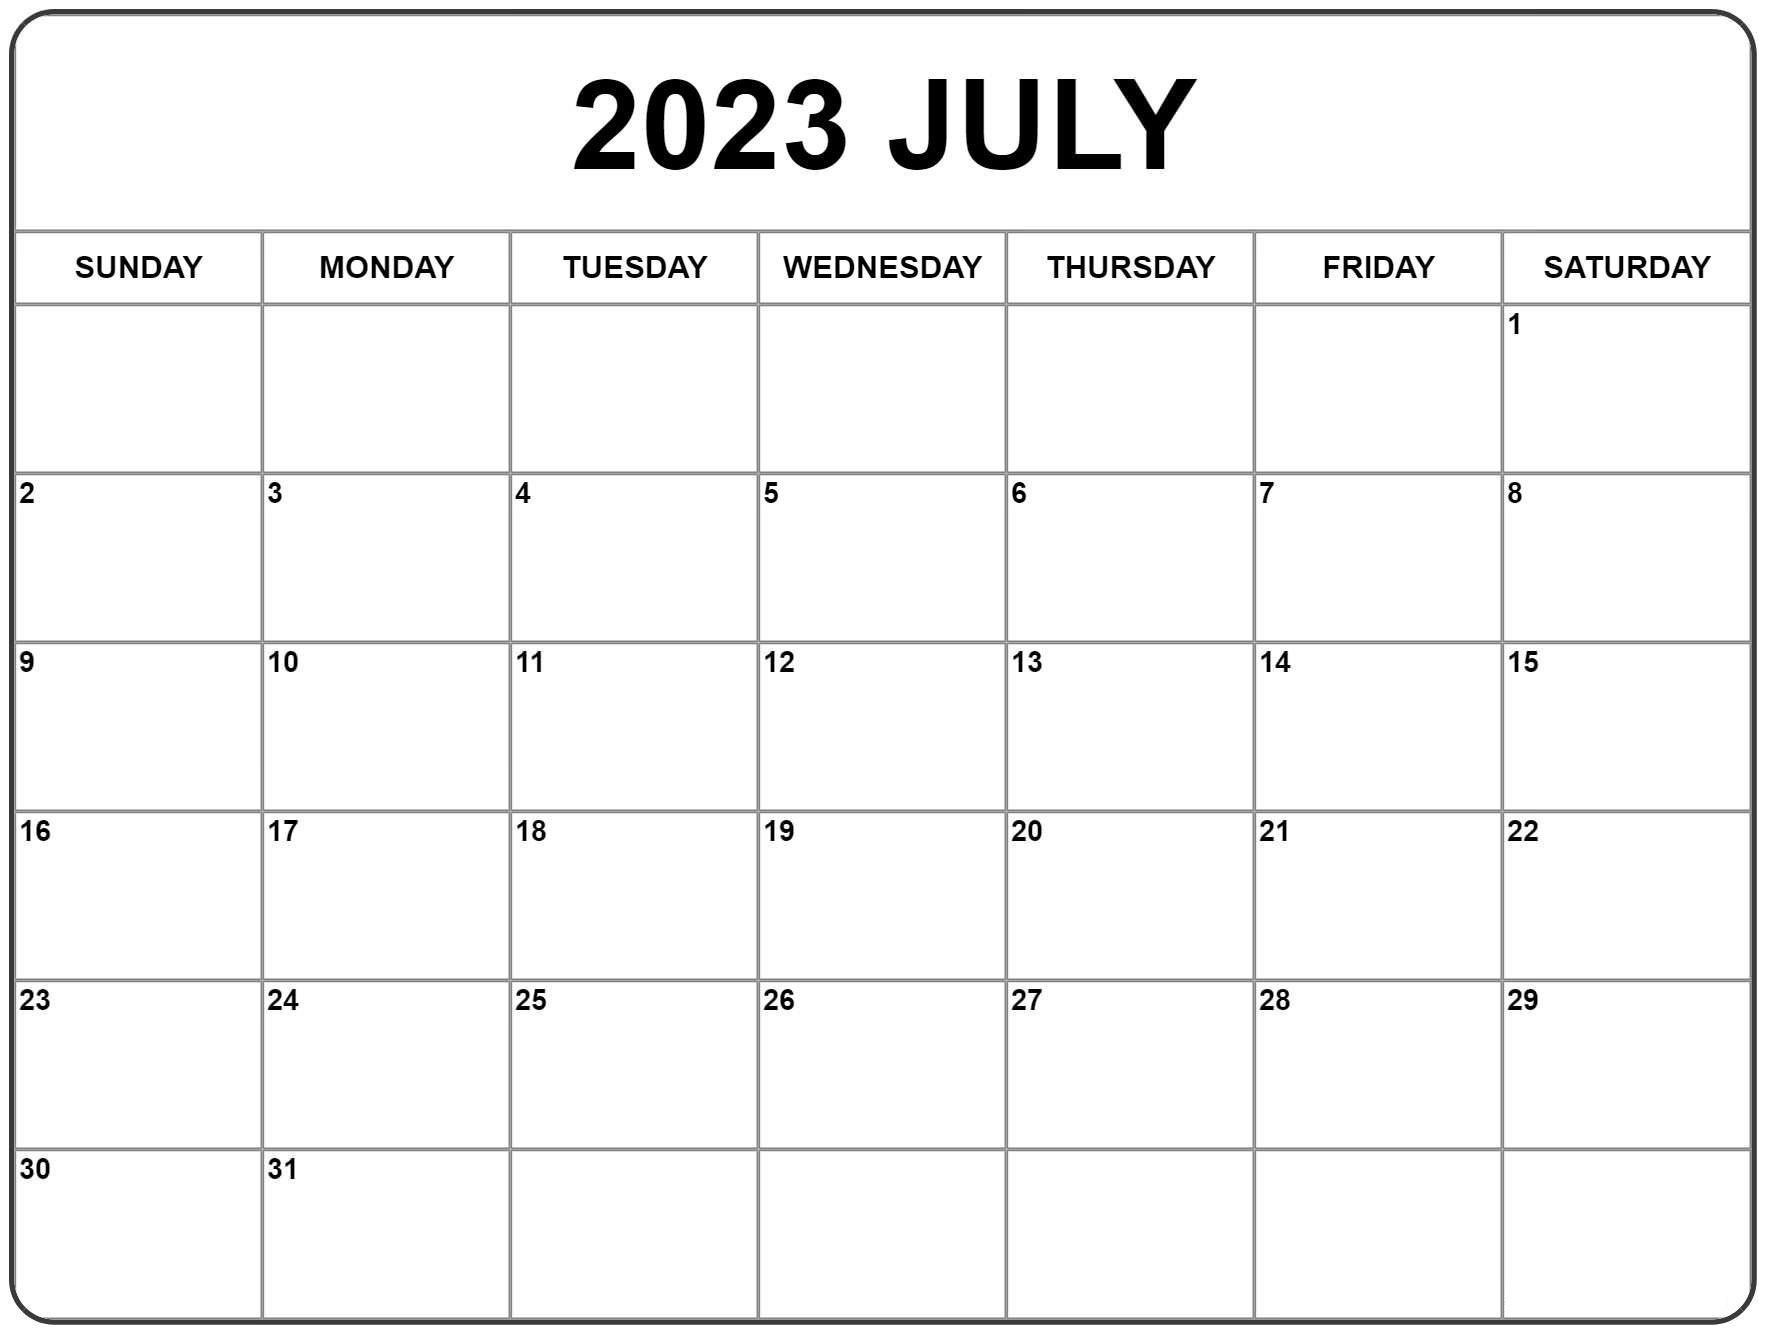 July 2023 calendar template in excel